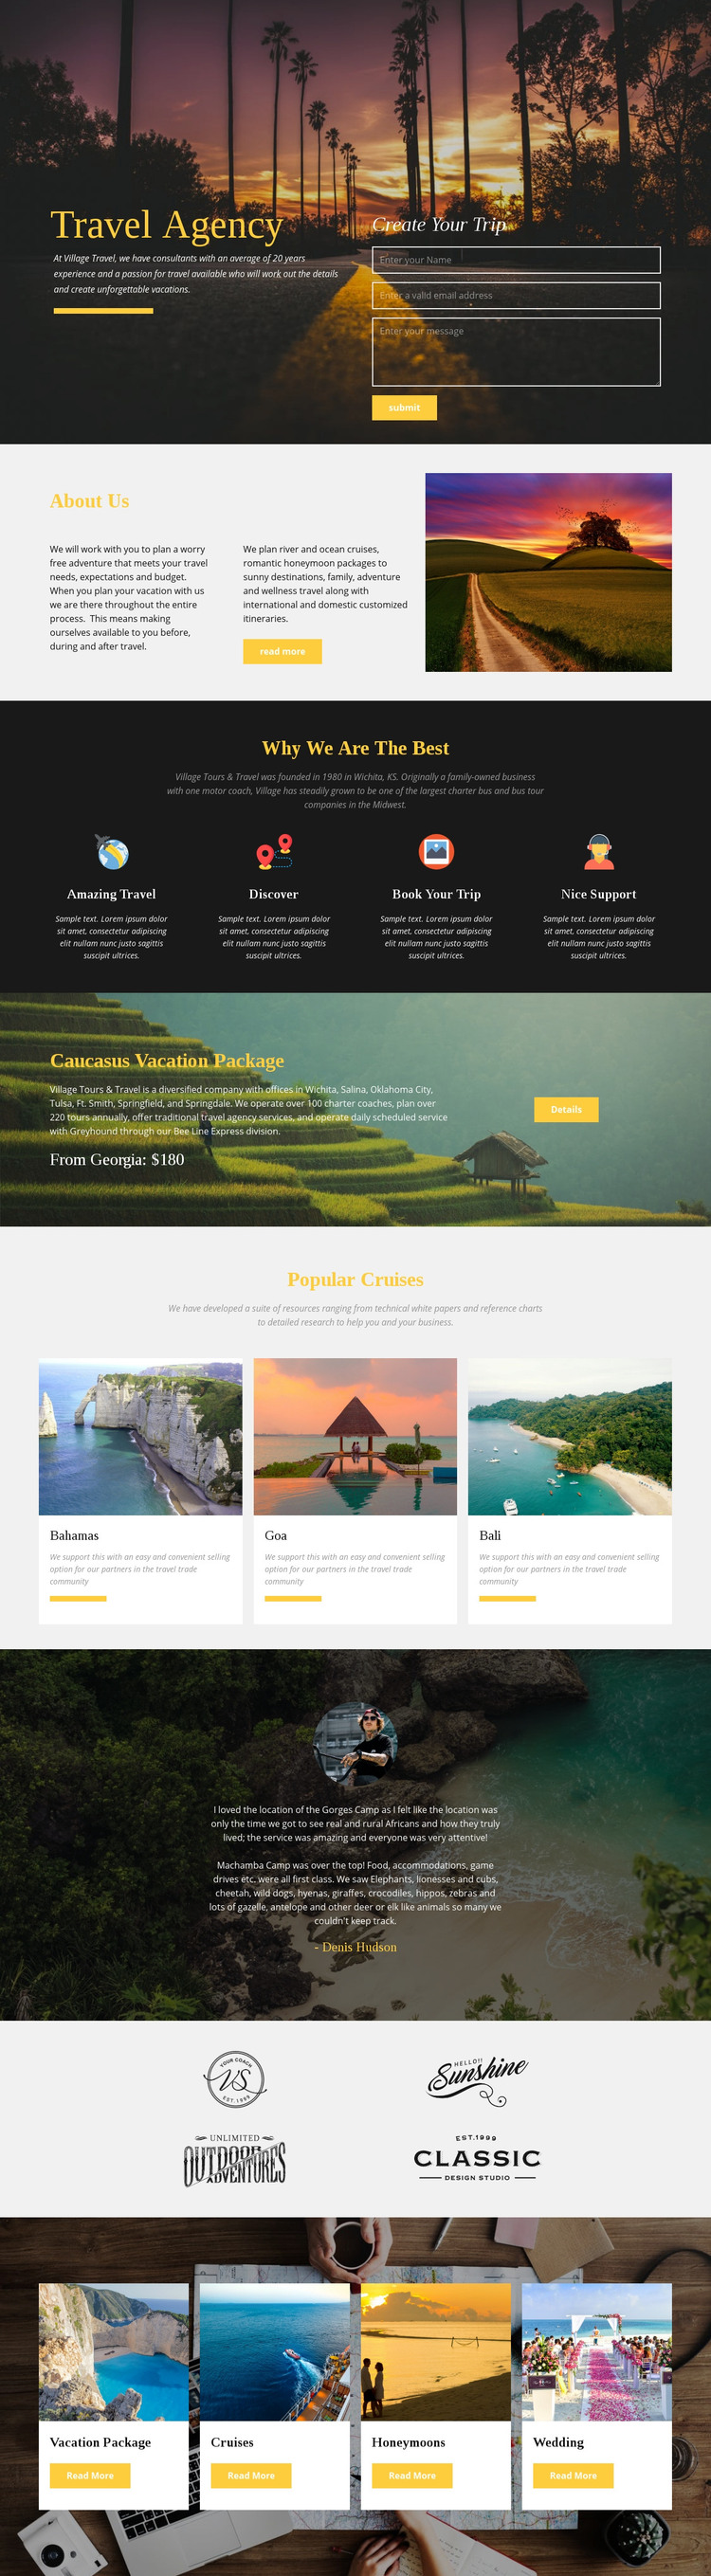 African safari tour company Homepage Design